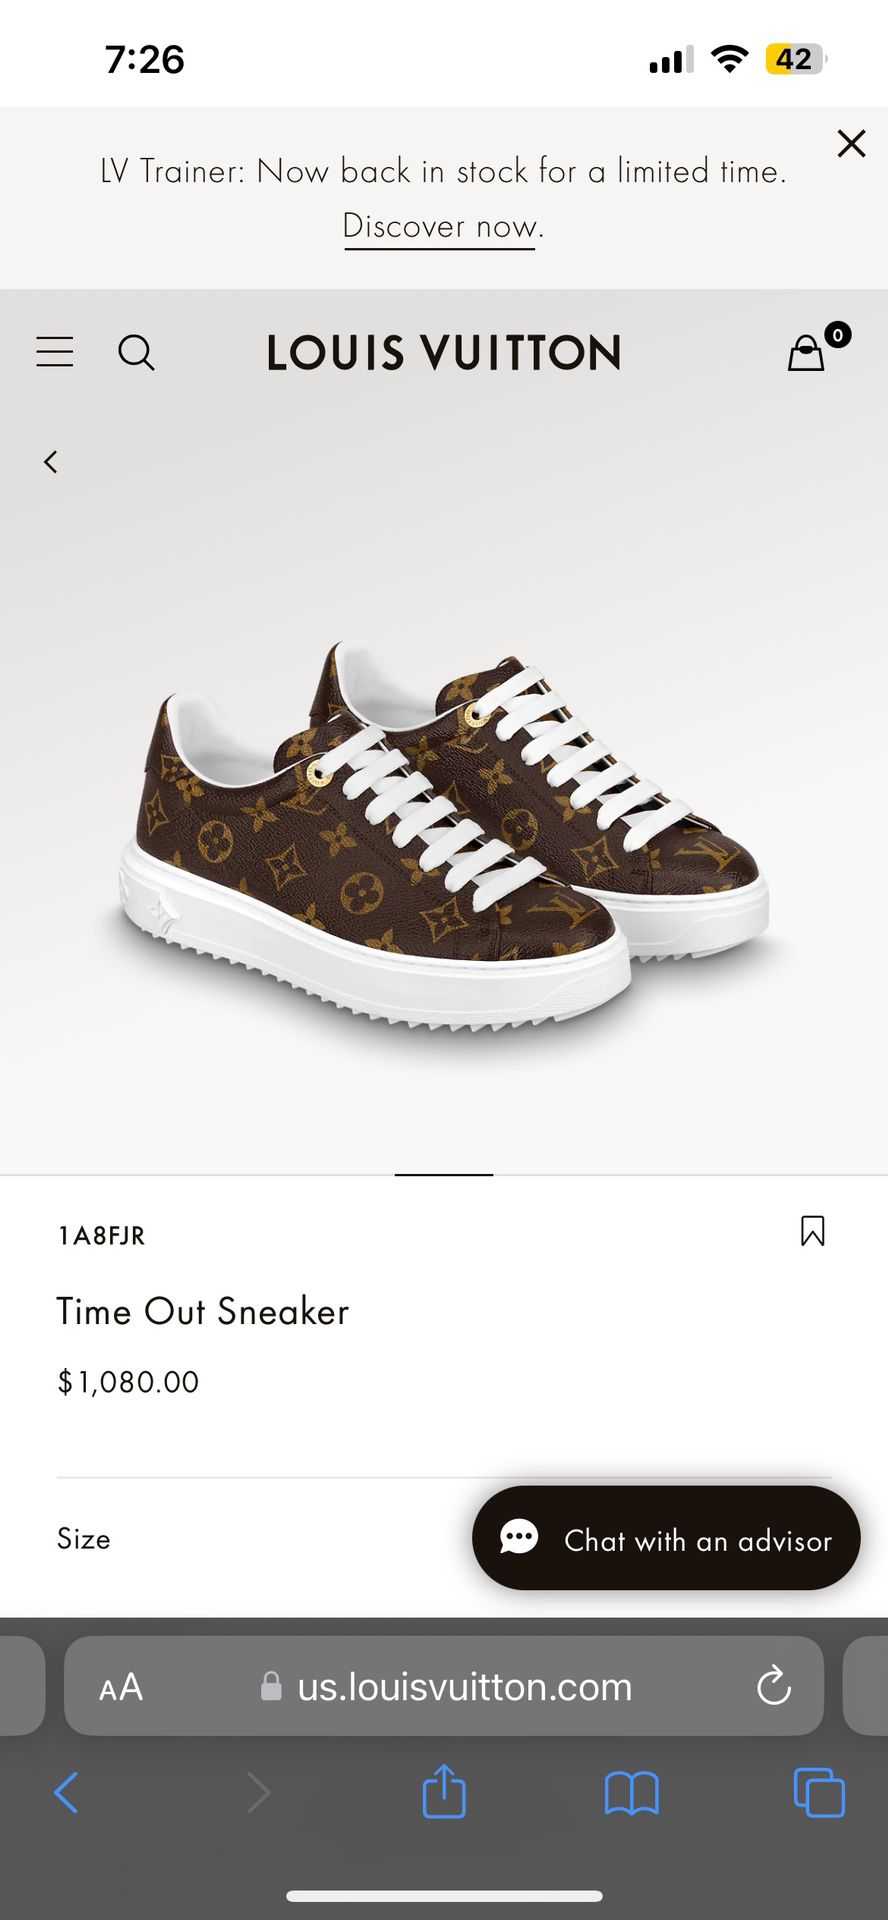 Time Out Sneaker - Schuhe 1A8FJR